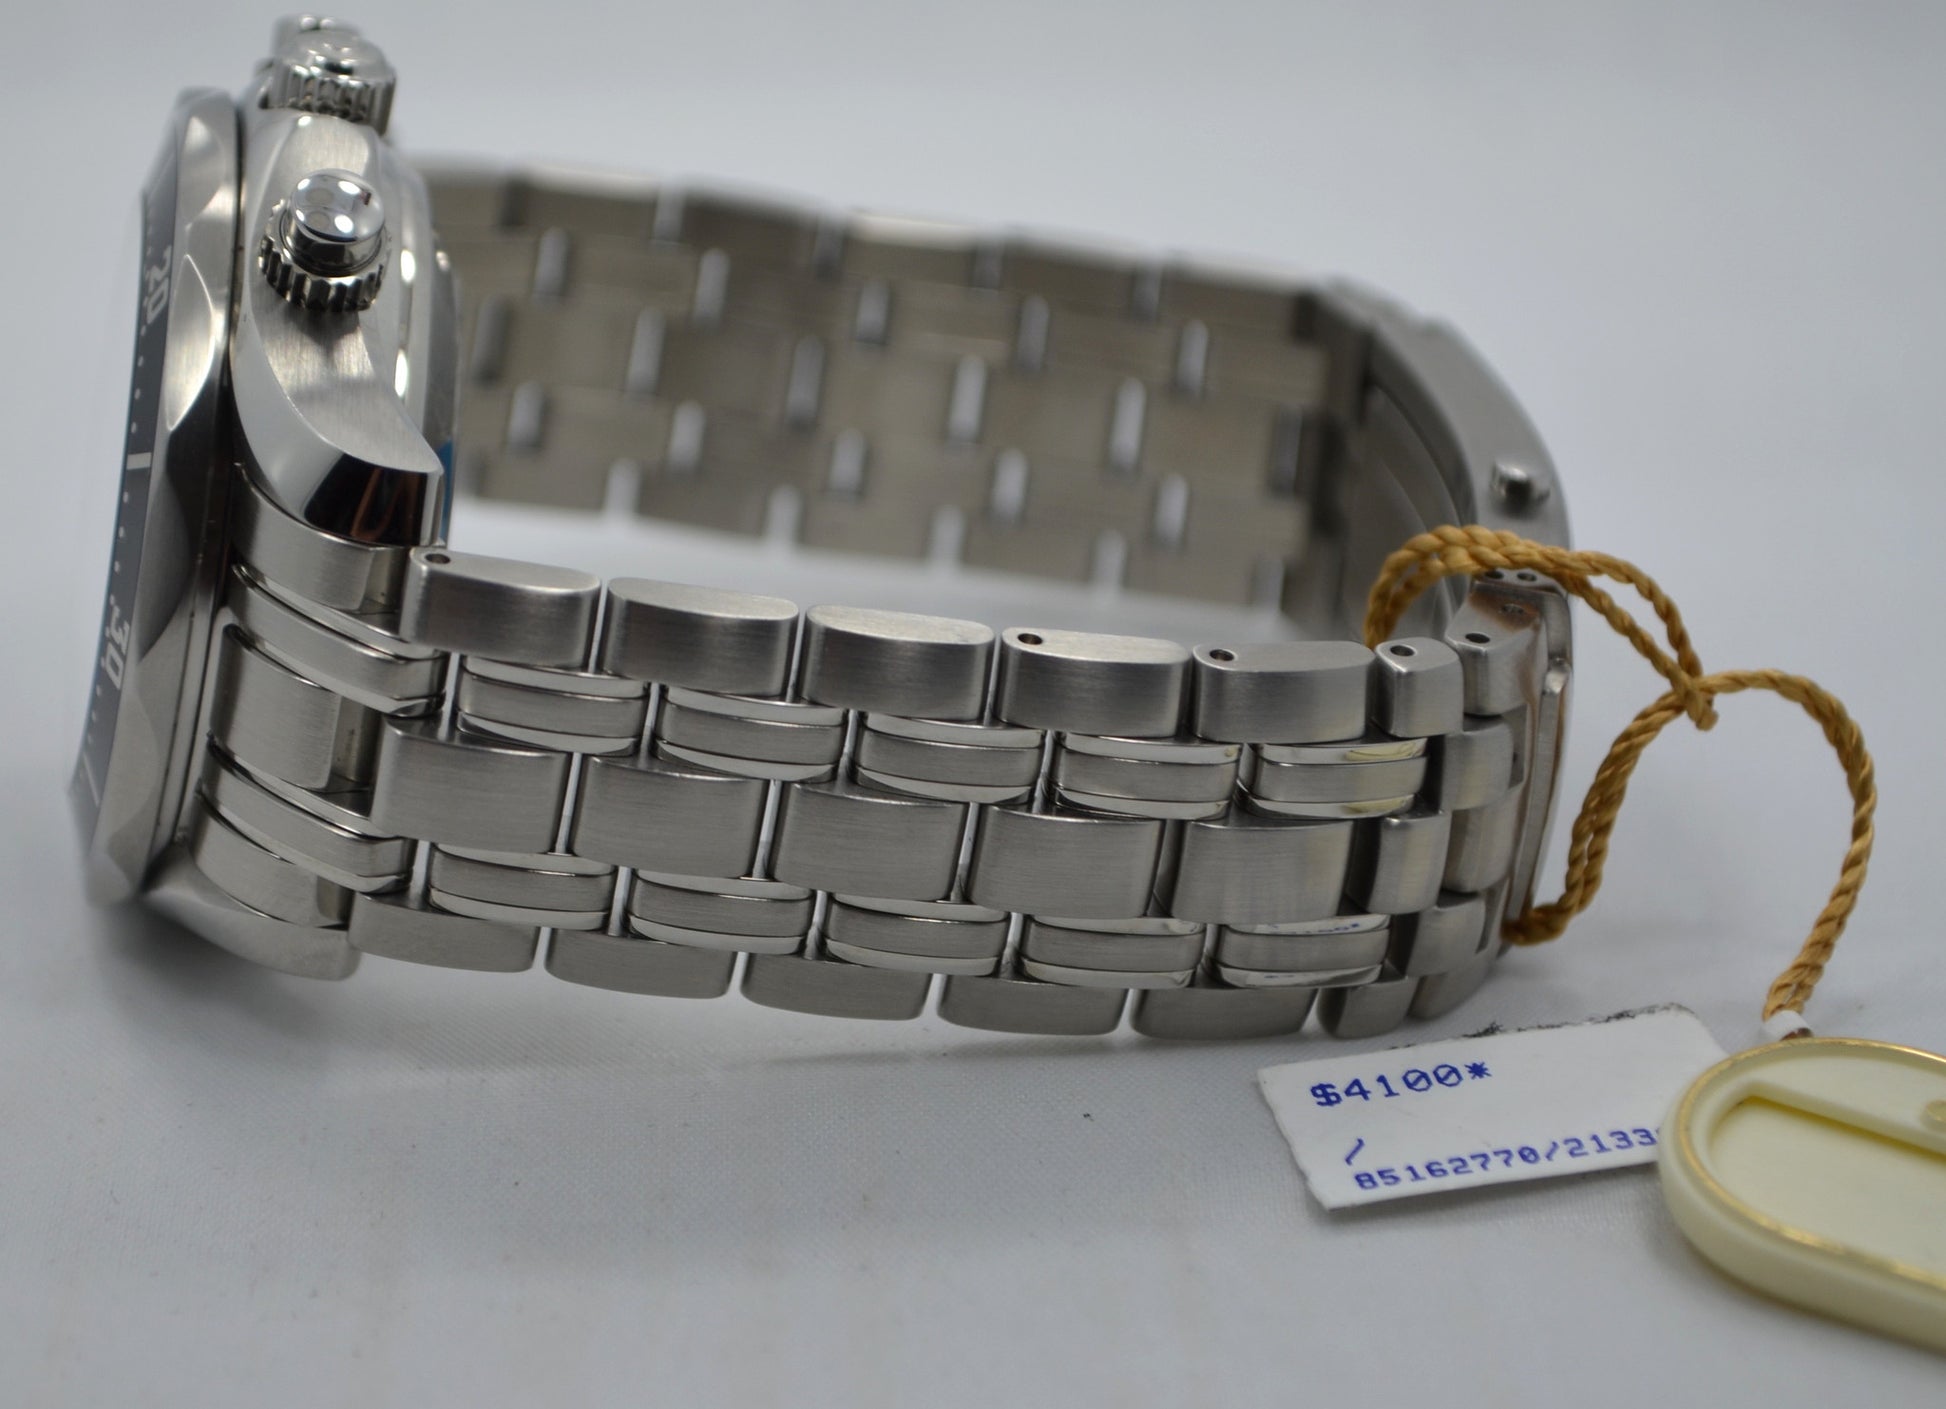 Omega Seamaster Professional 213.30.42.40.01.001 Chronograph 300M Steel Watch - Hashtag Watch Company